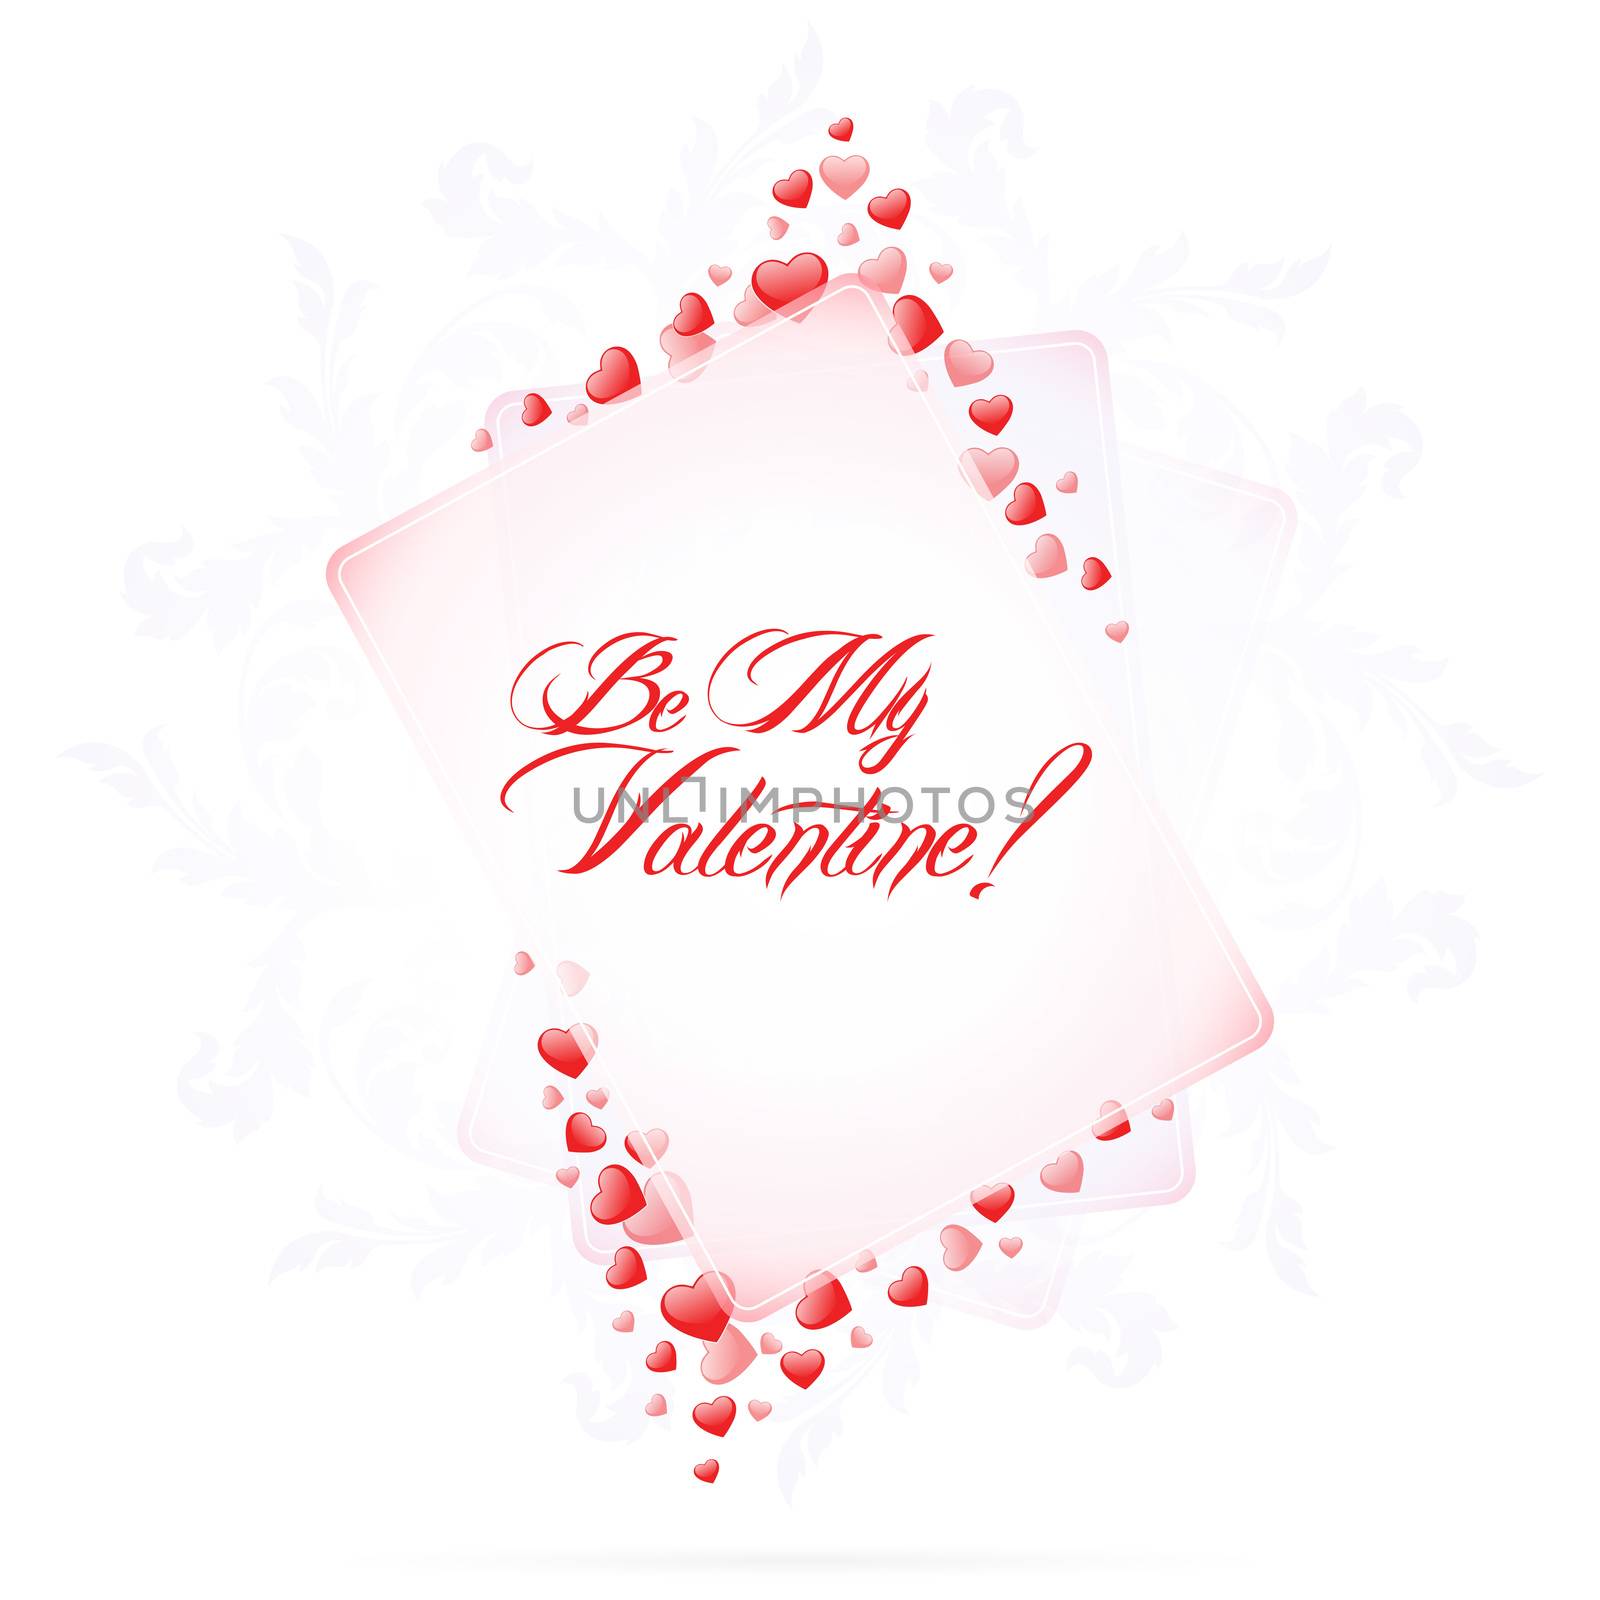  Calligraphic Valentine's Card with Be My Valentine